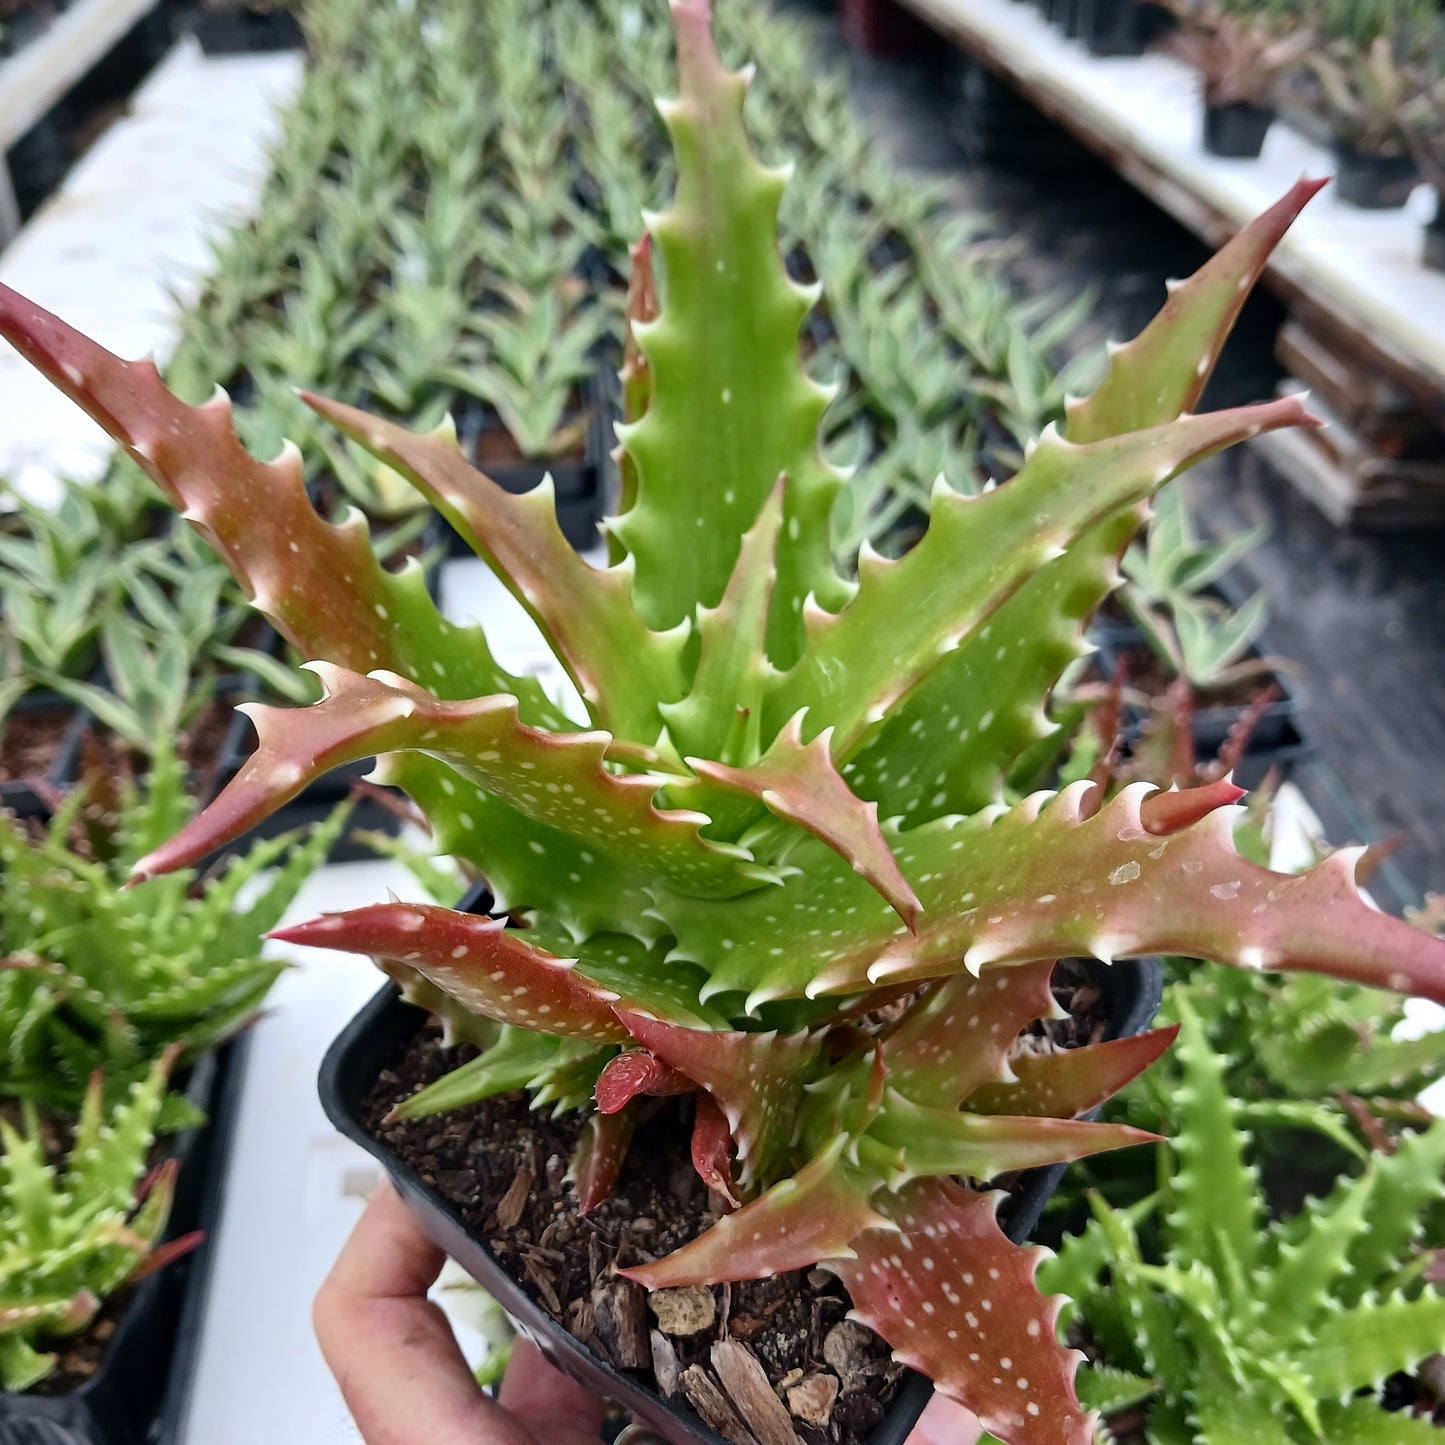 Aloe dorothea "Crimson" - 4in